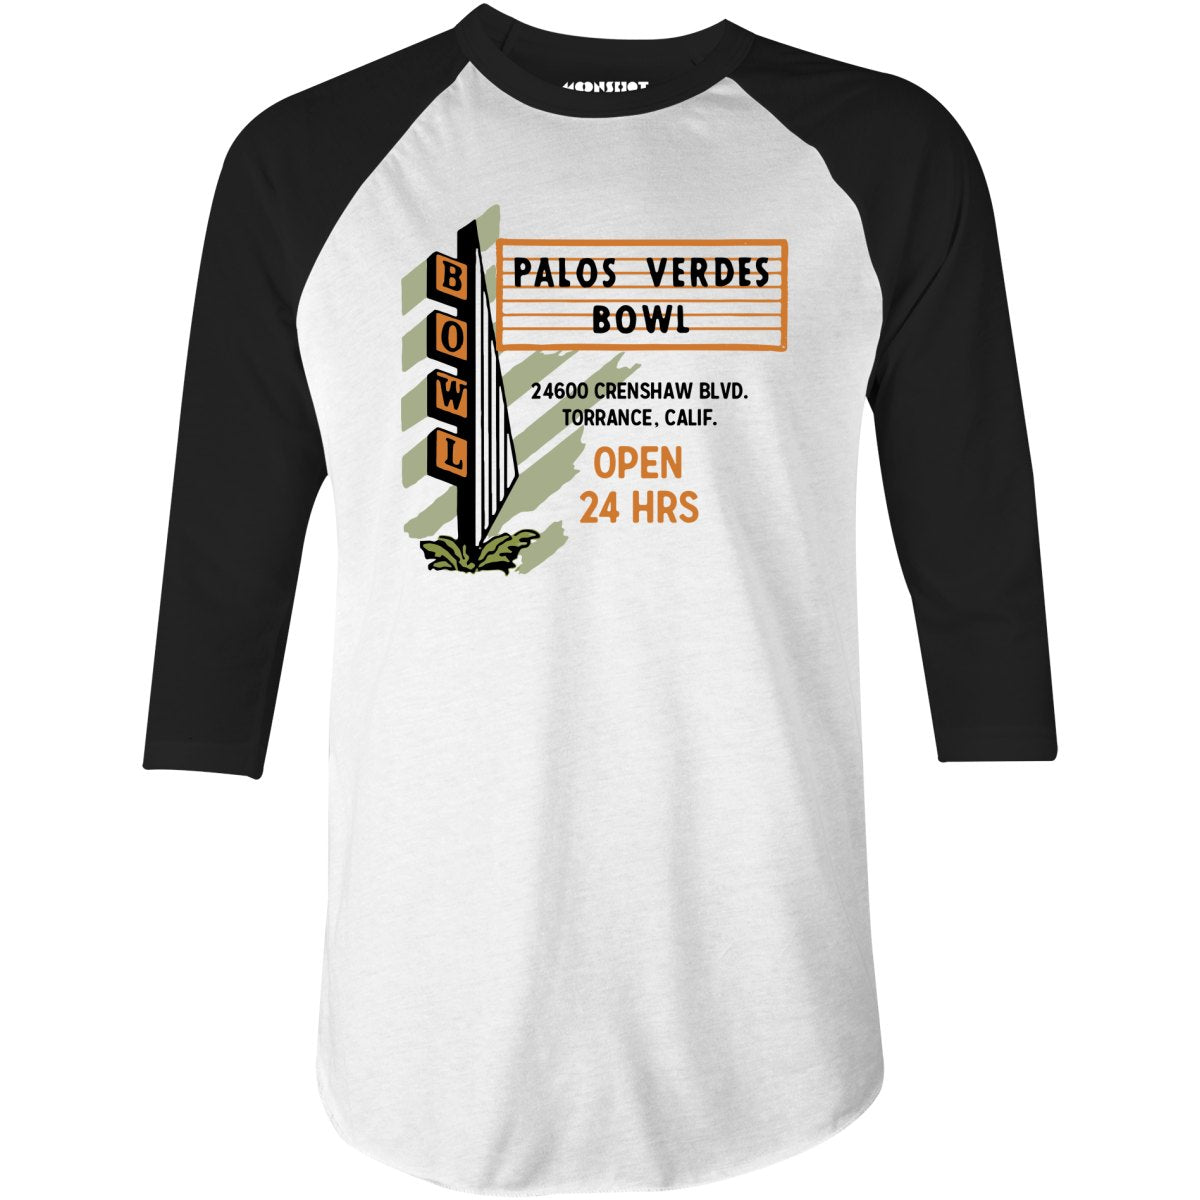 Palos Verdes Bowl - Torrance, CA - Vintage Bowling Alley - 3/4 Sleeve Raglan T-Shirt